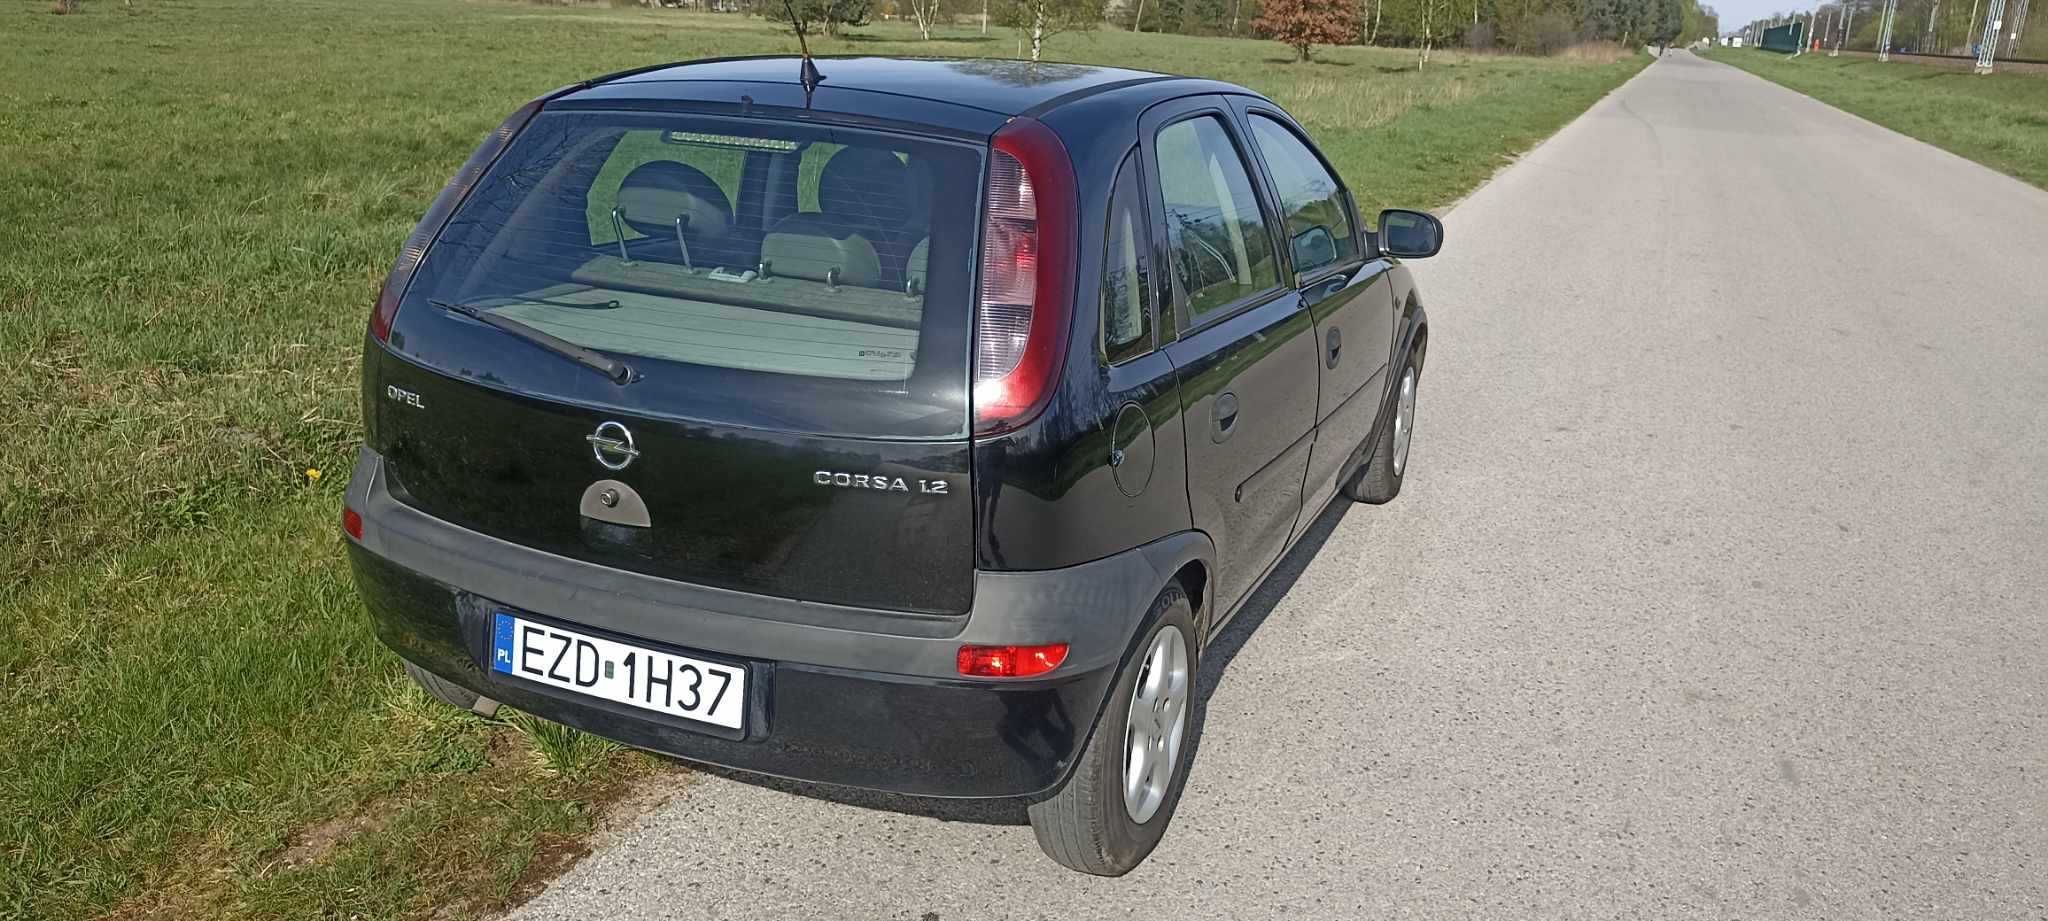 Opel Corsa C 1,2 benzyna